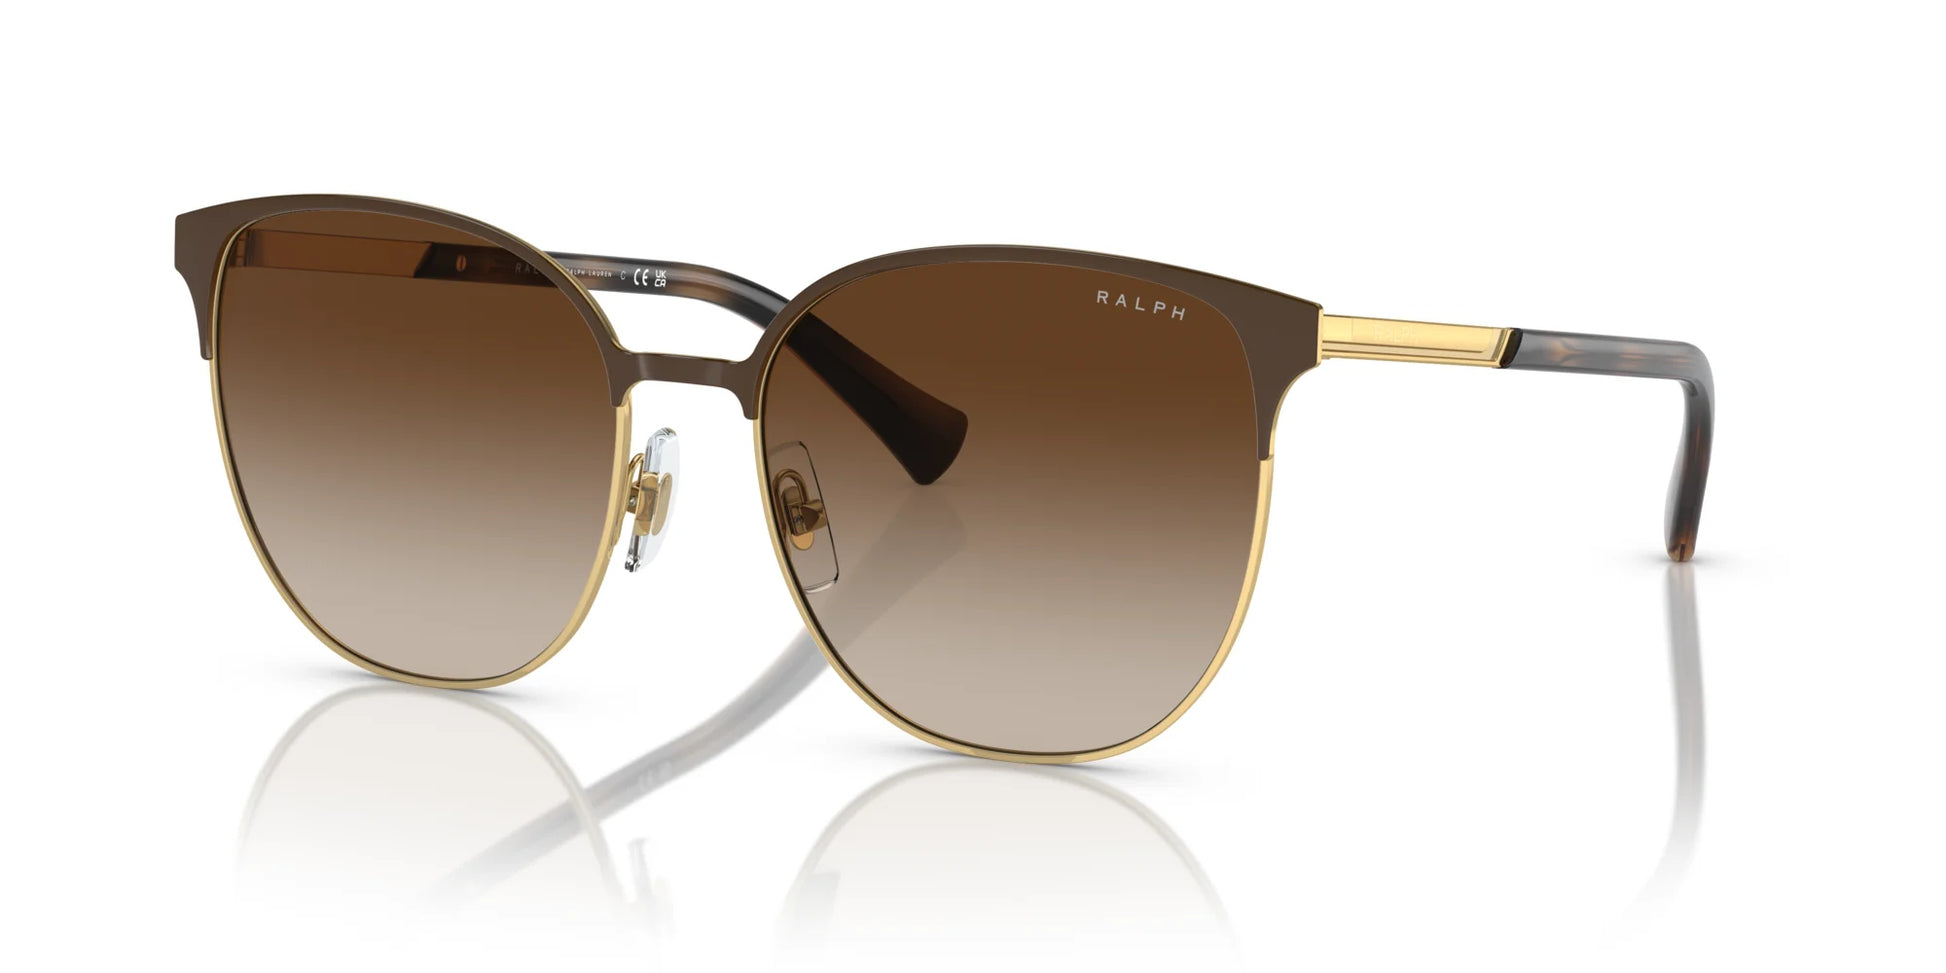 Ralph RA4140 Sunglasses Shiny Gold / Gradient Brown